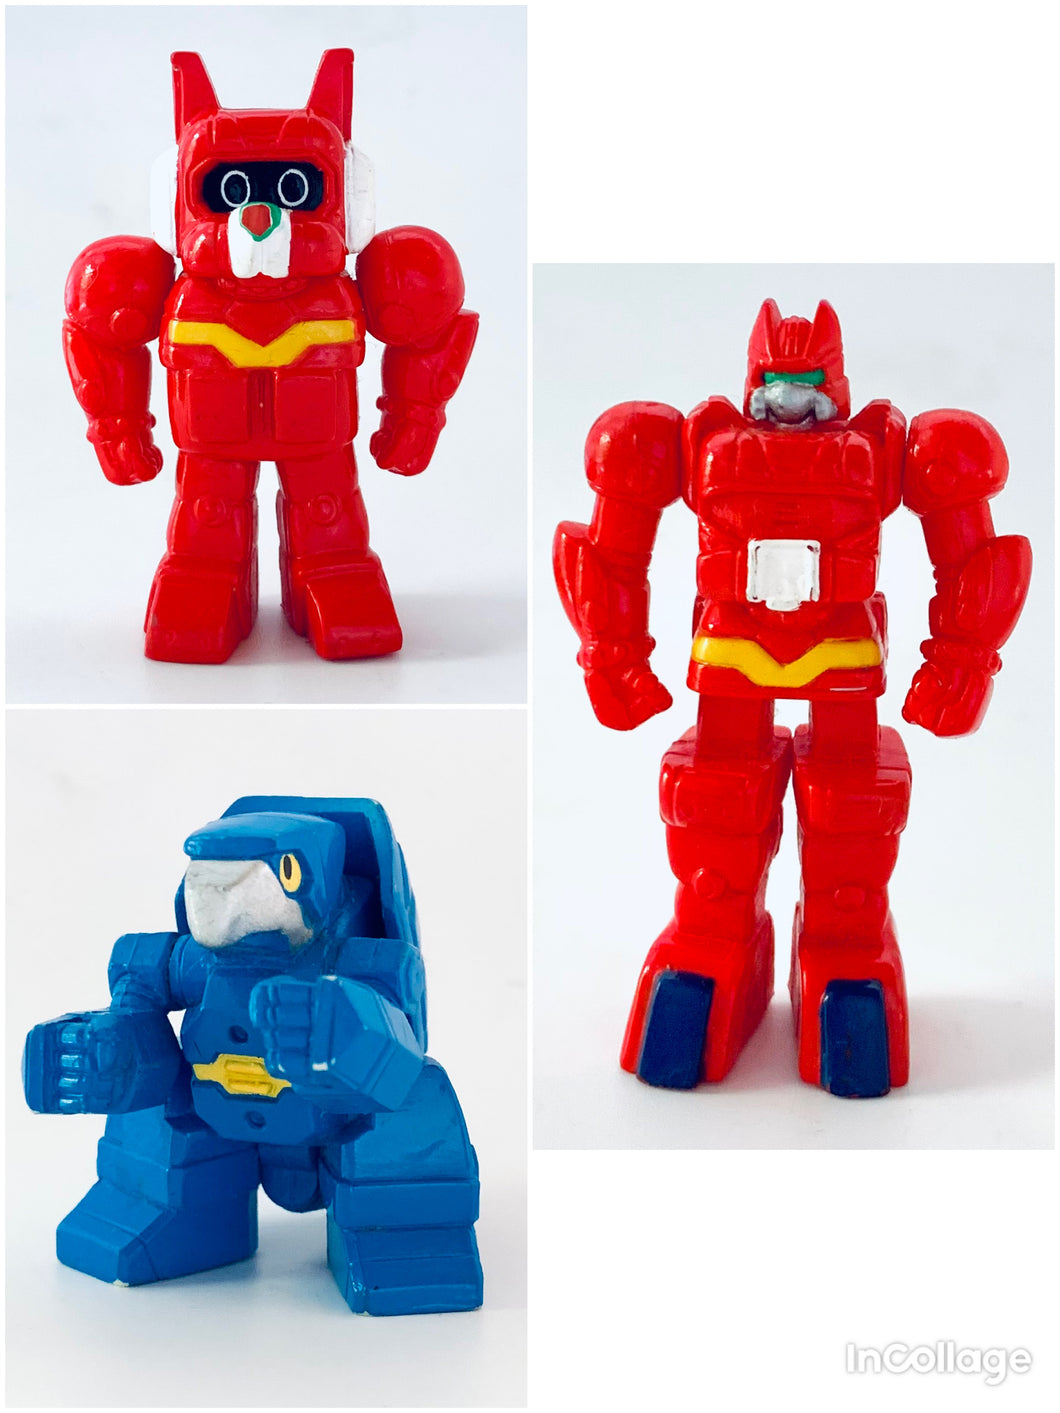 Tetsuwan Tantei Robotack - Robotack, Kamerock & Robotack Super Mode - Mini Figures